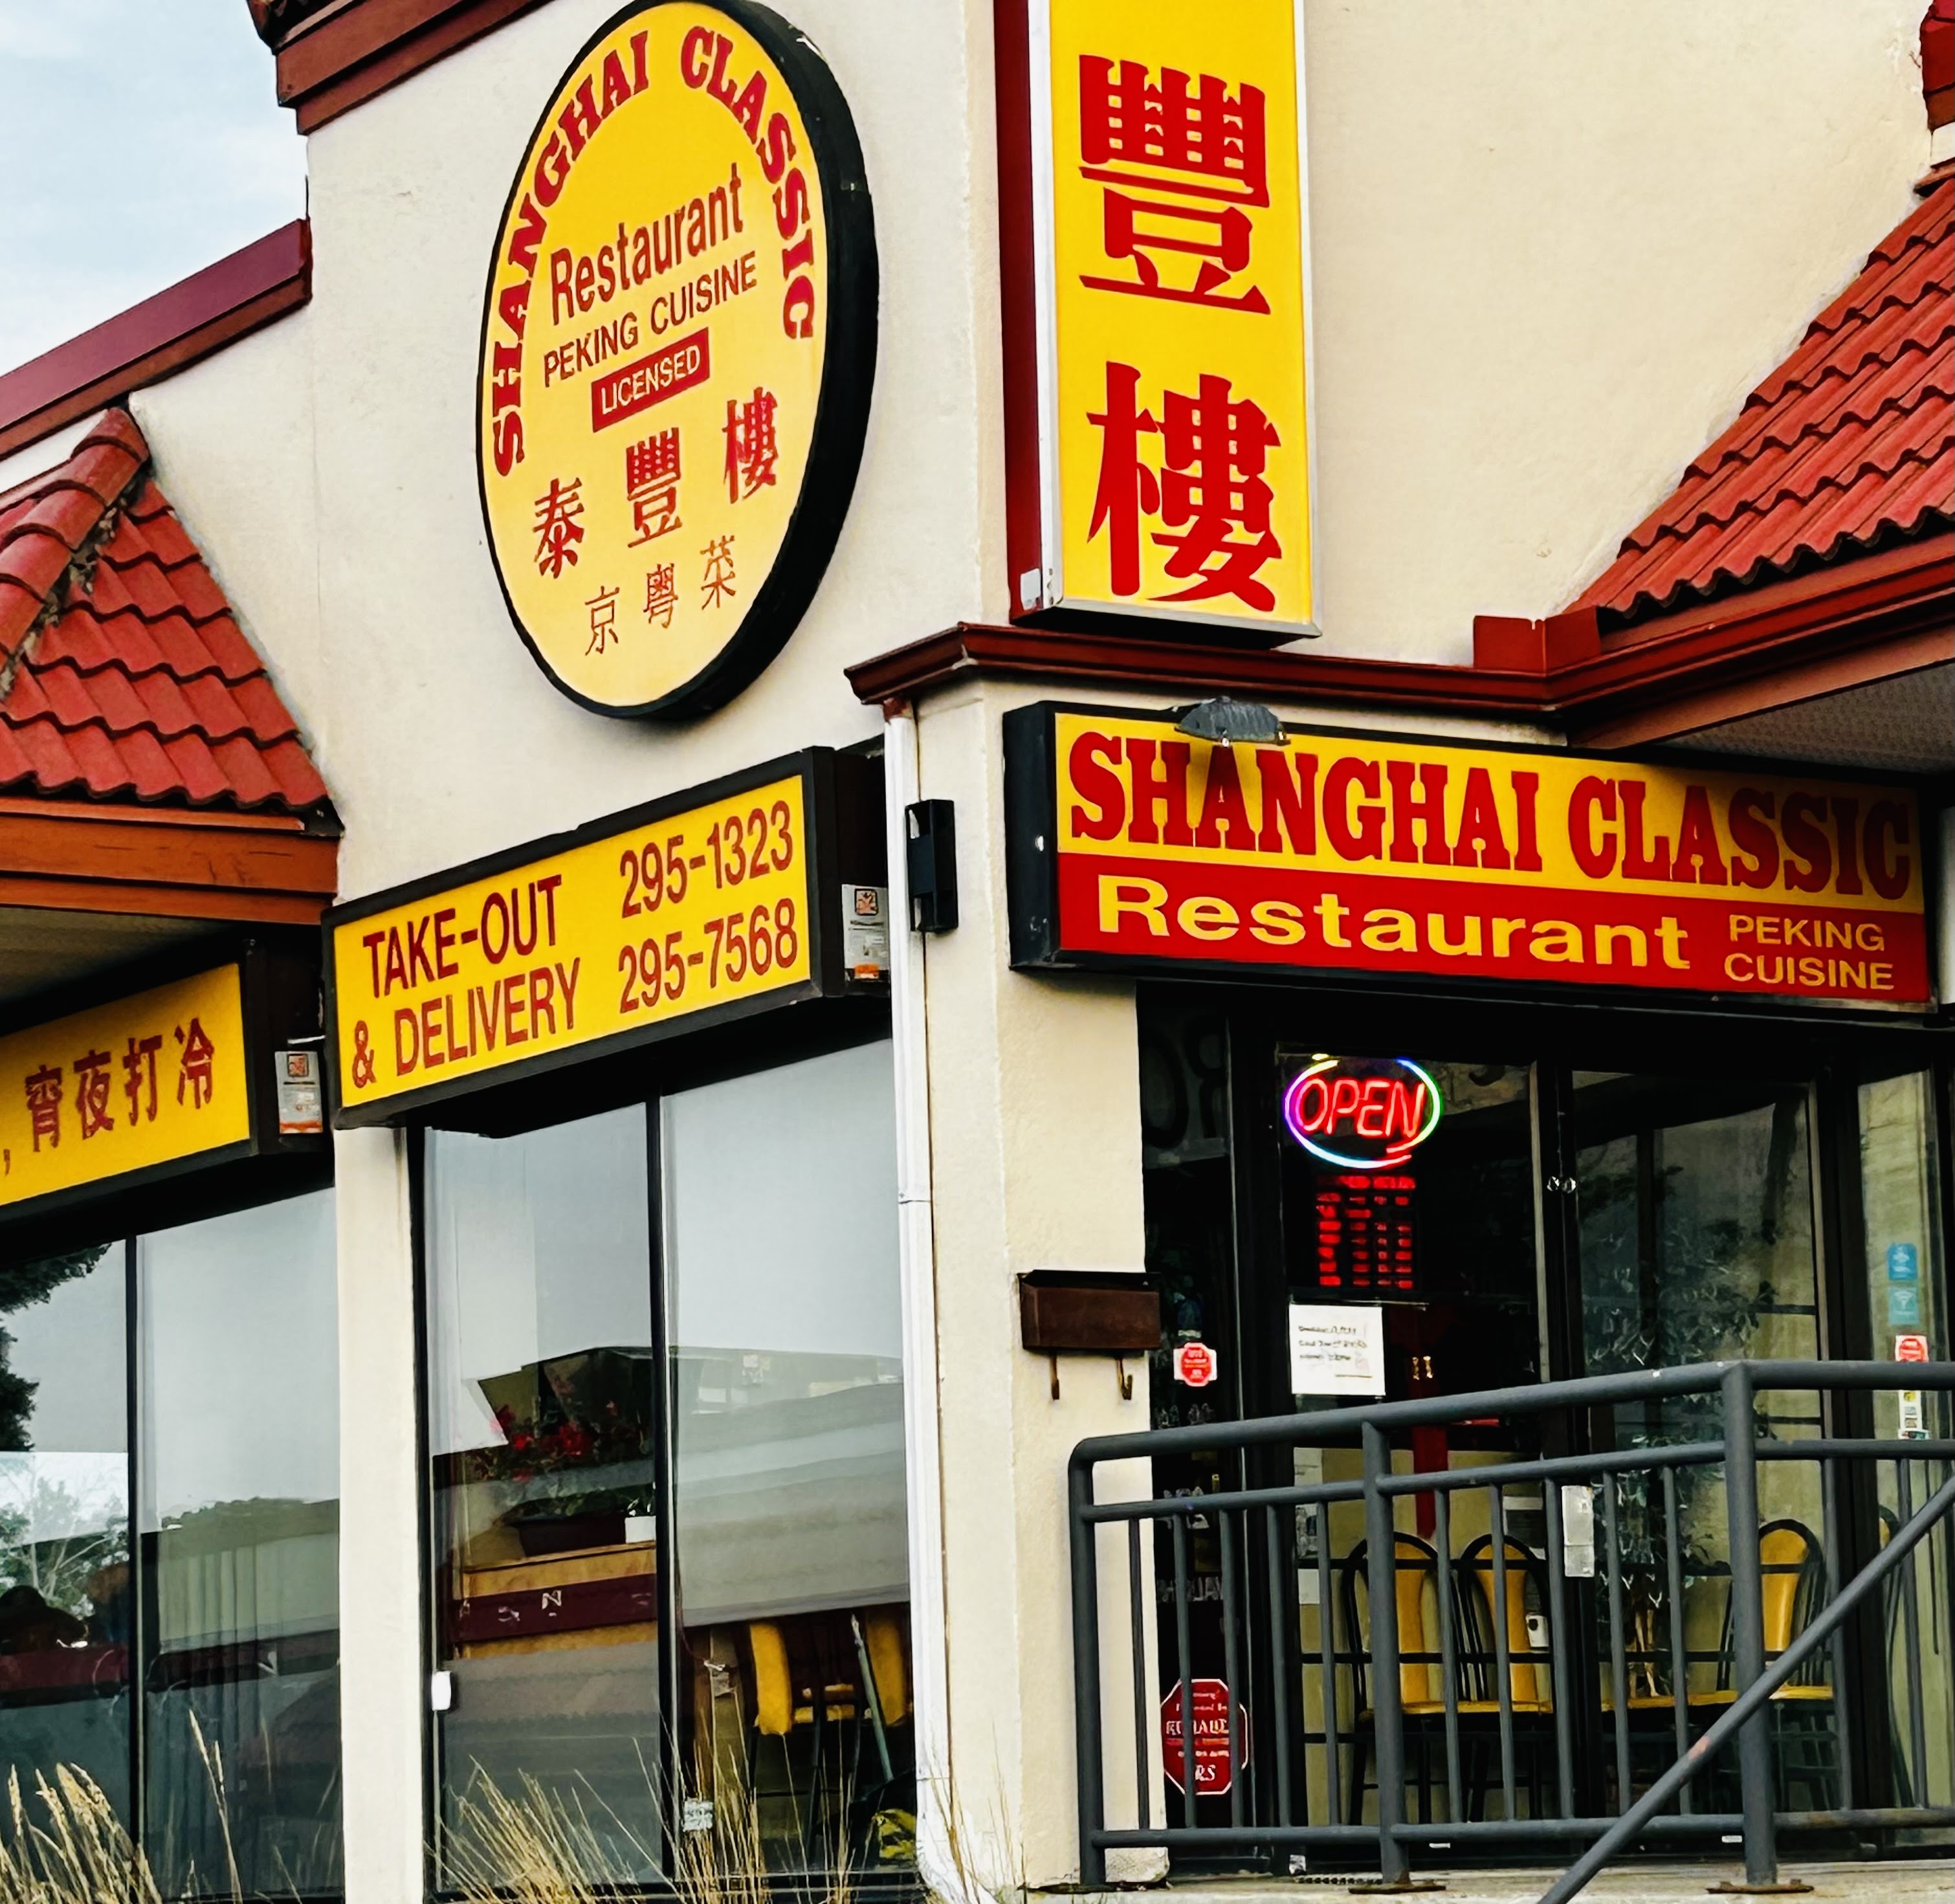 Shanghai Classic Restaurant | Business | d4u.ca